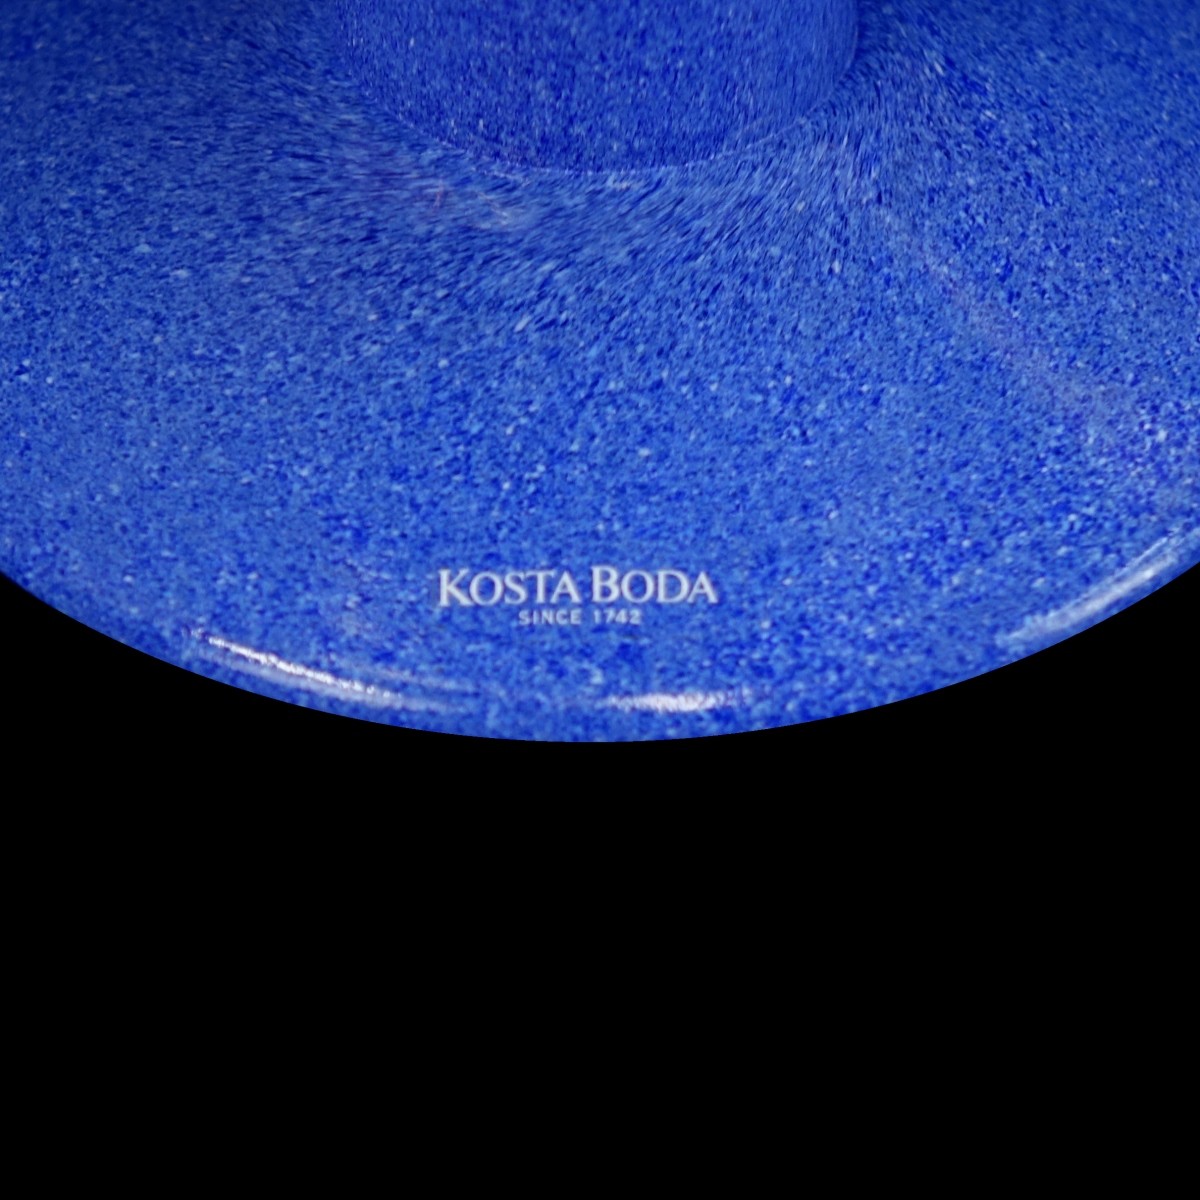 Kosta Boda Vases and Compote